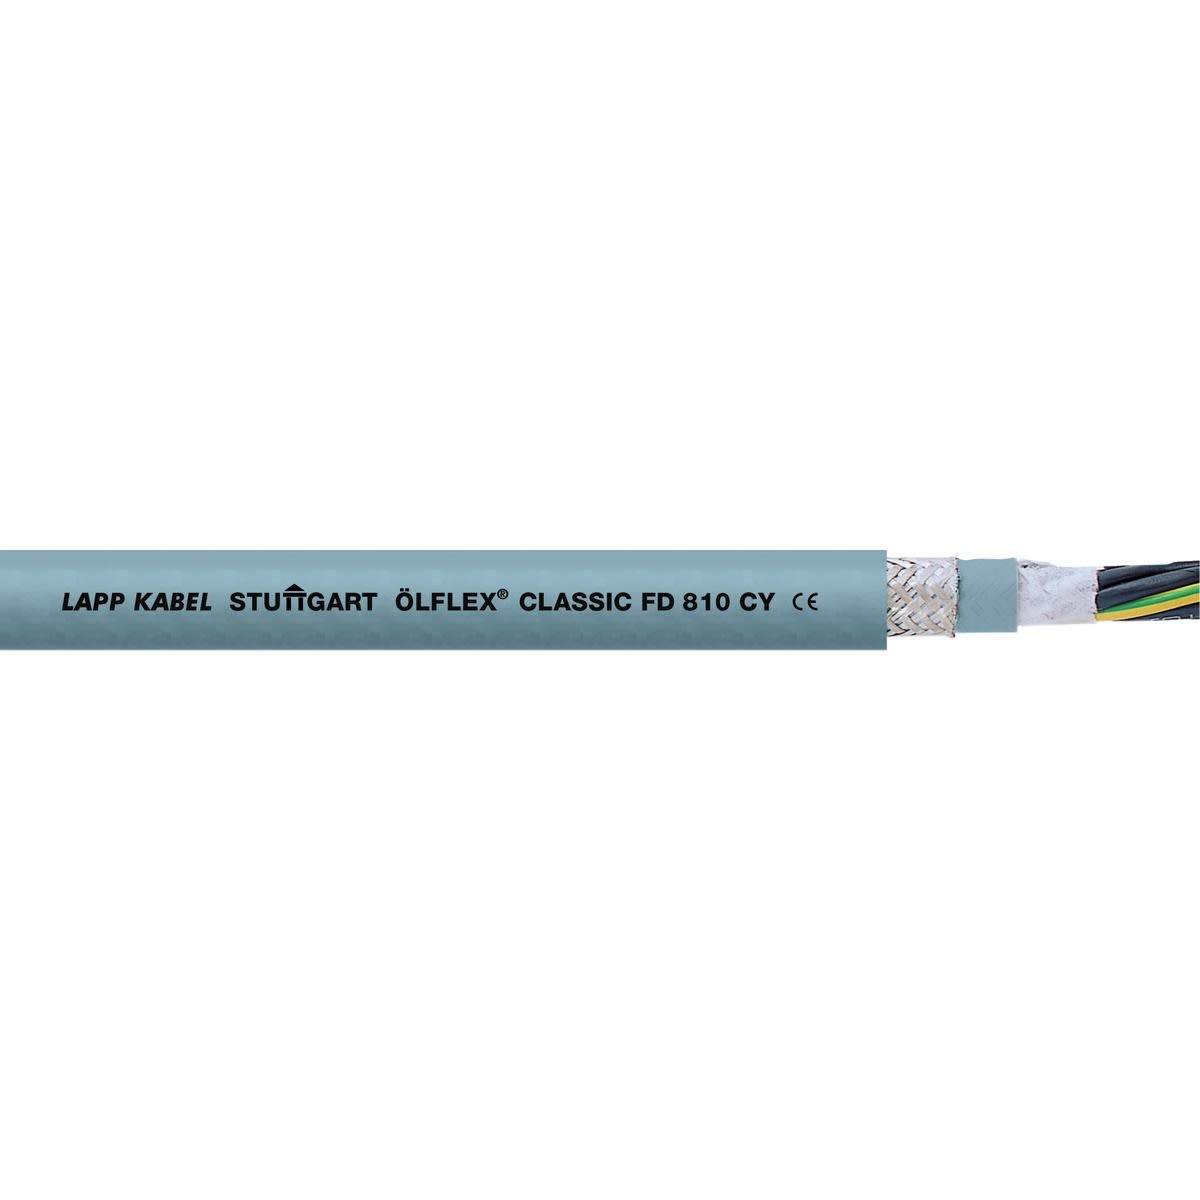 Lapp - oLFLEX CLASSIC FD 810 CY 4G10